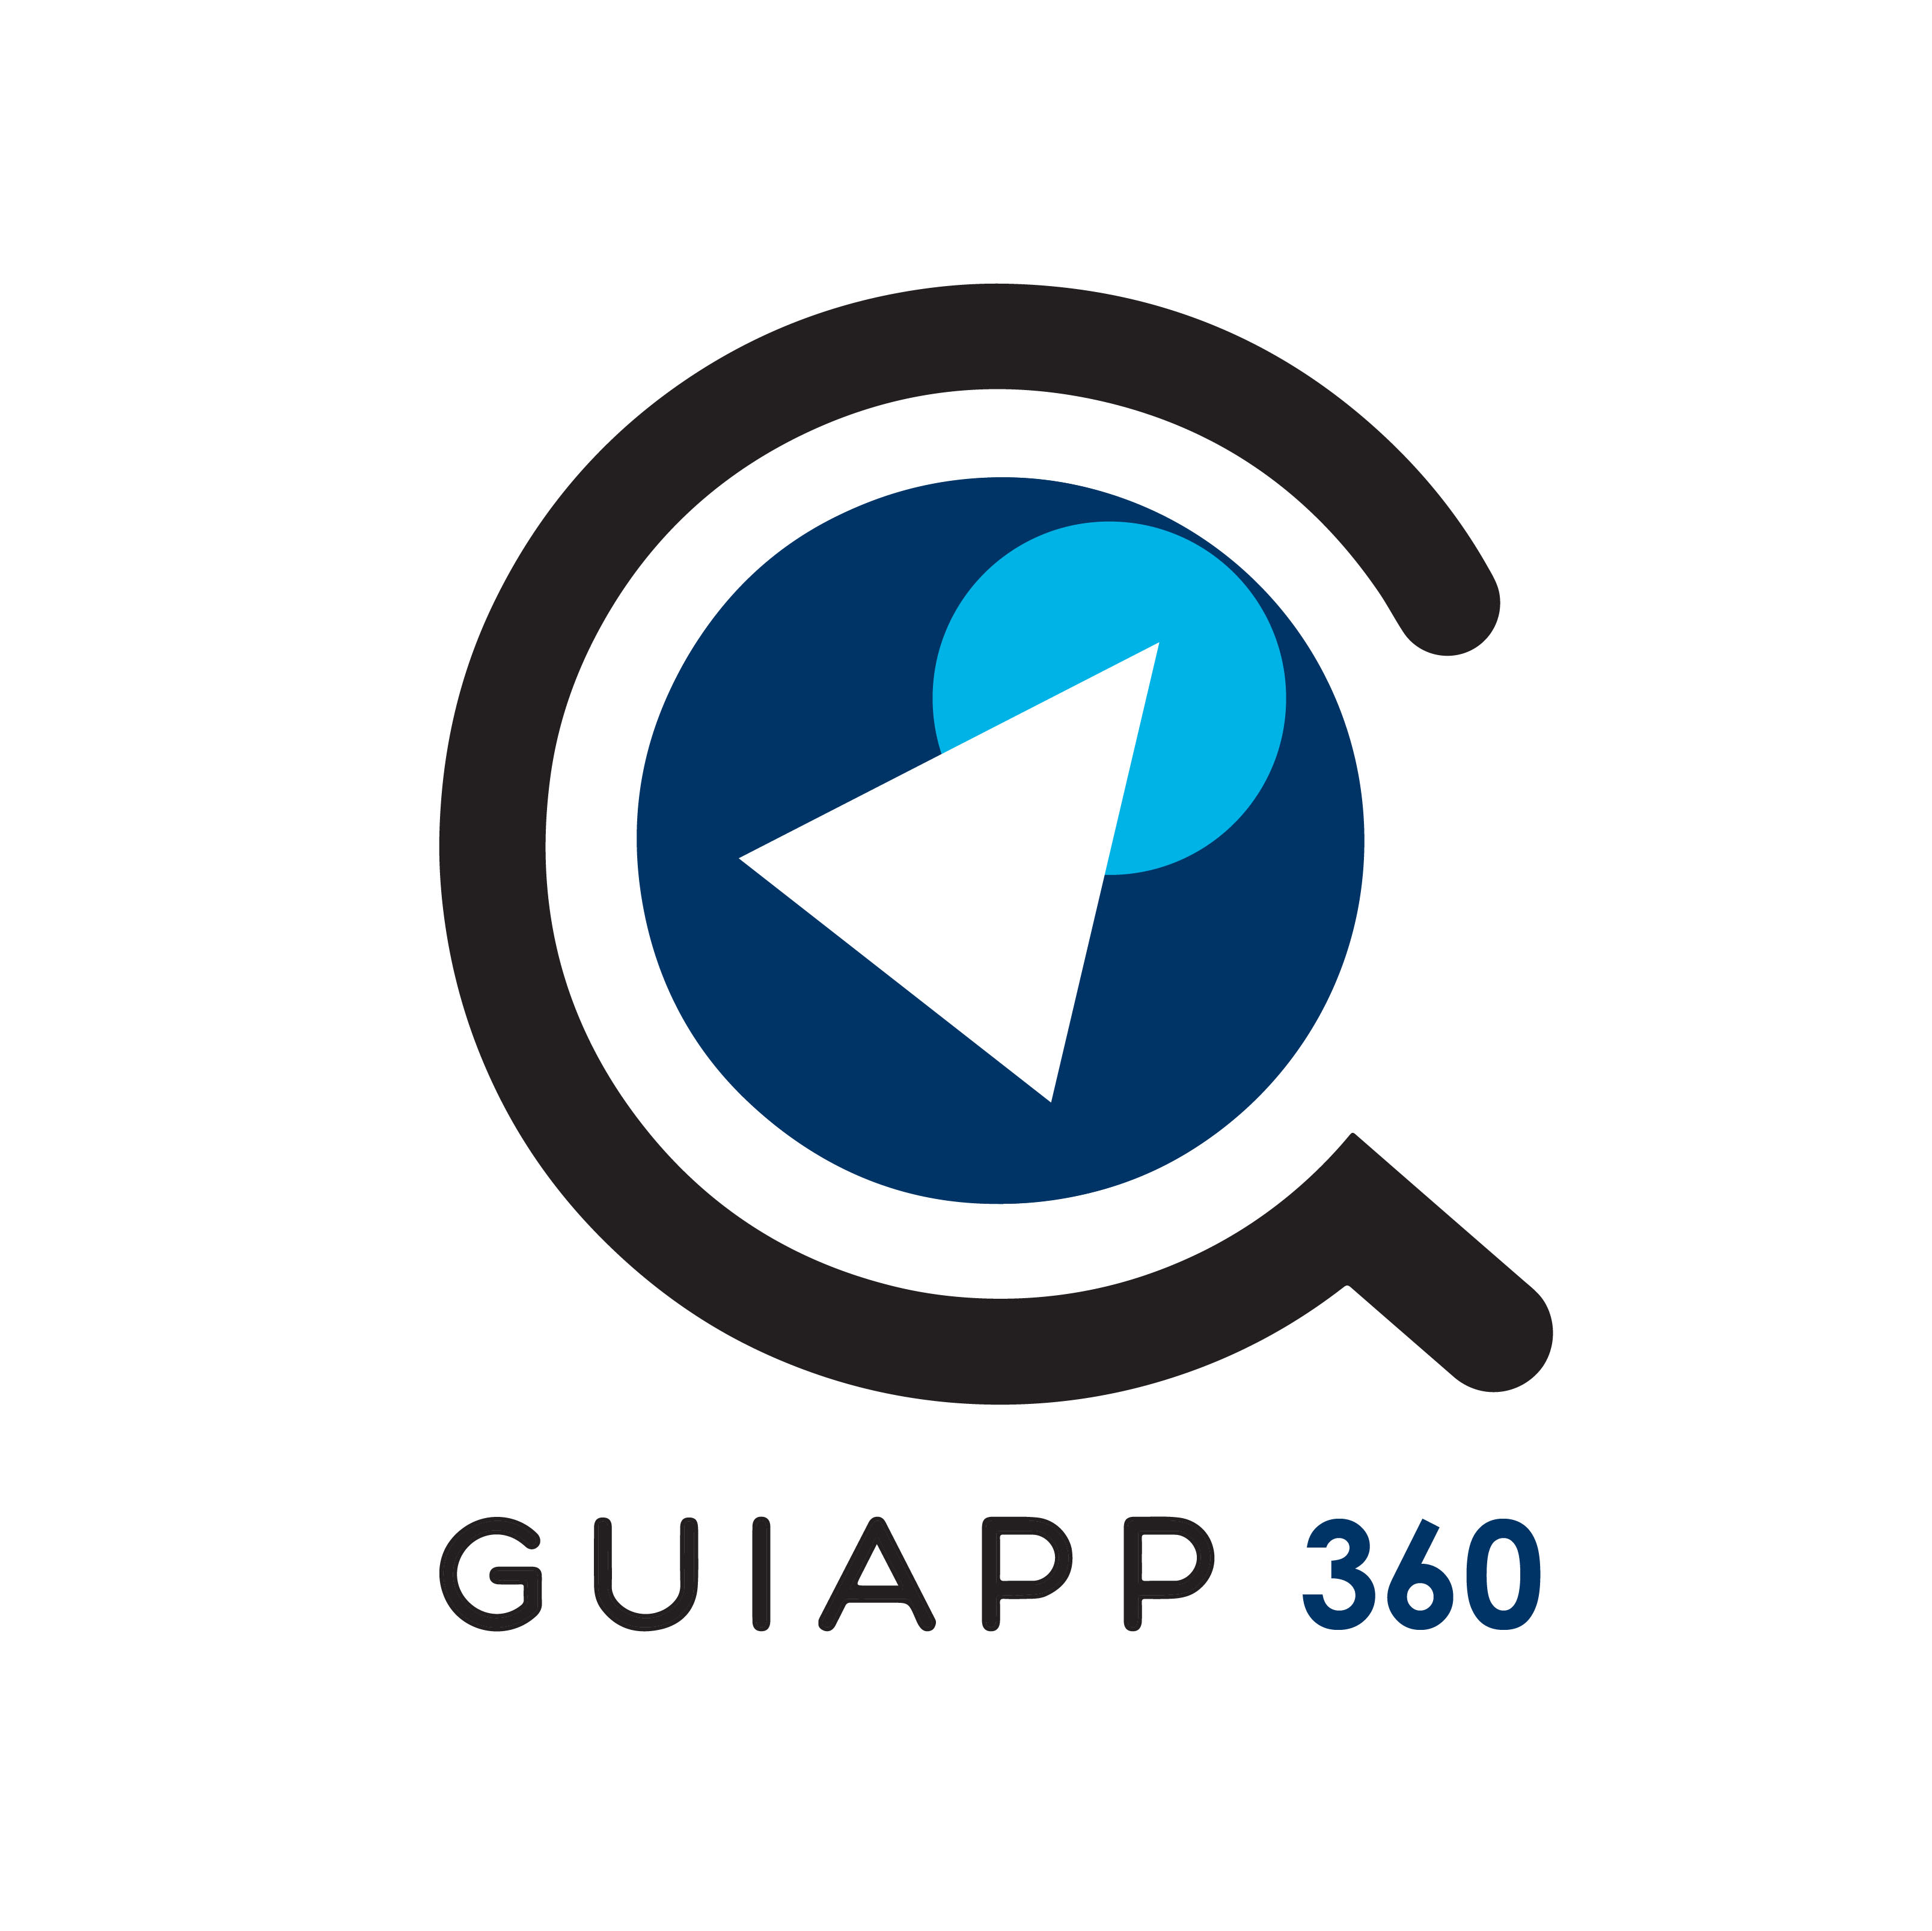 Guiapp360